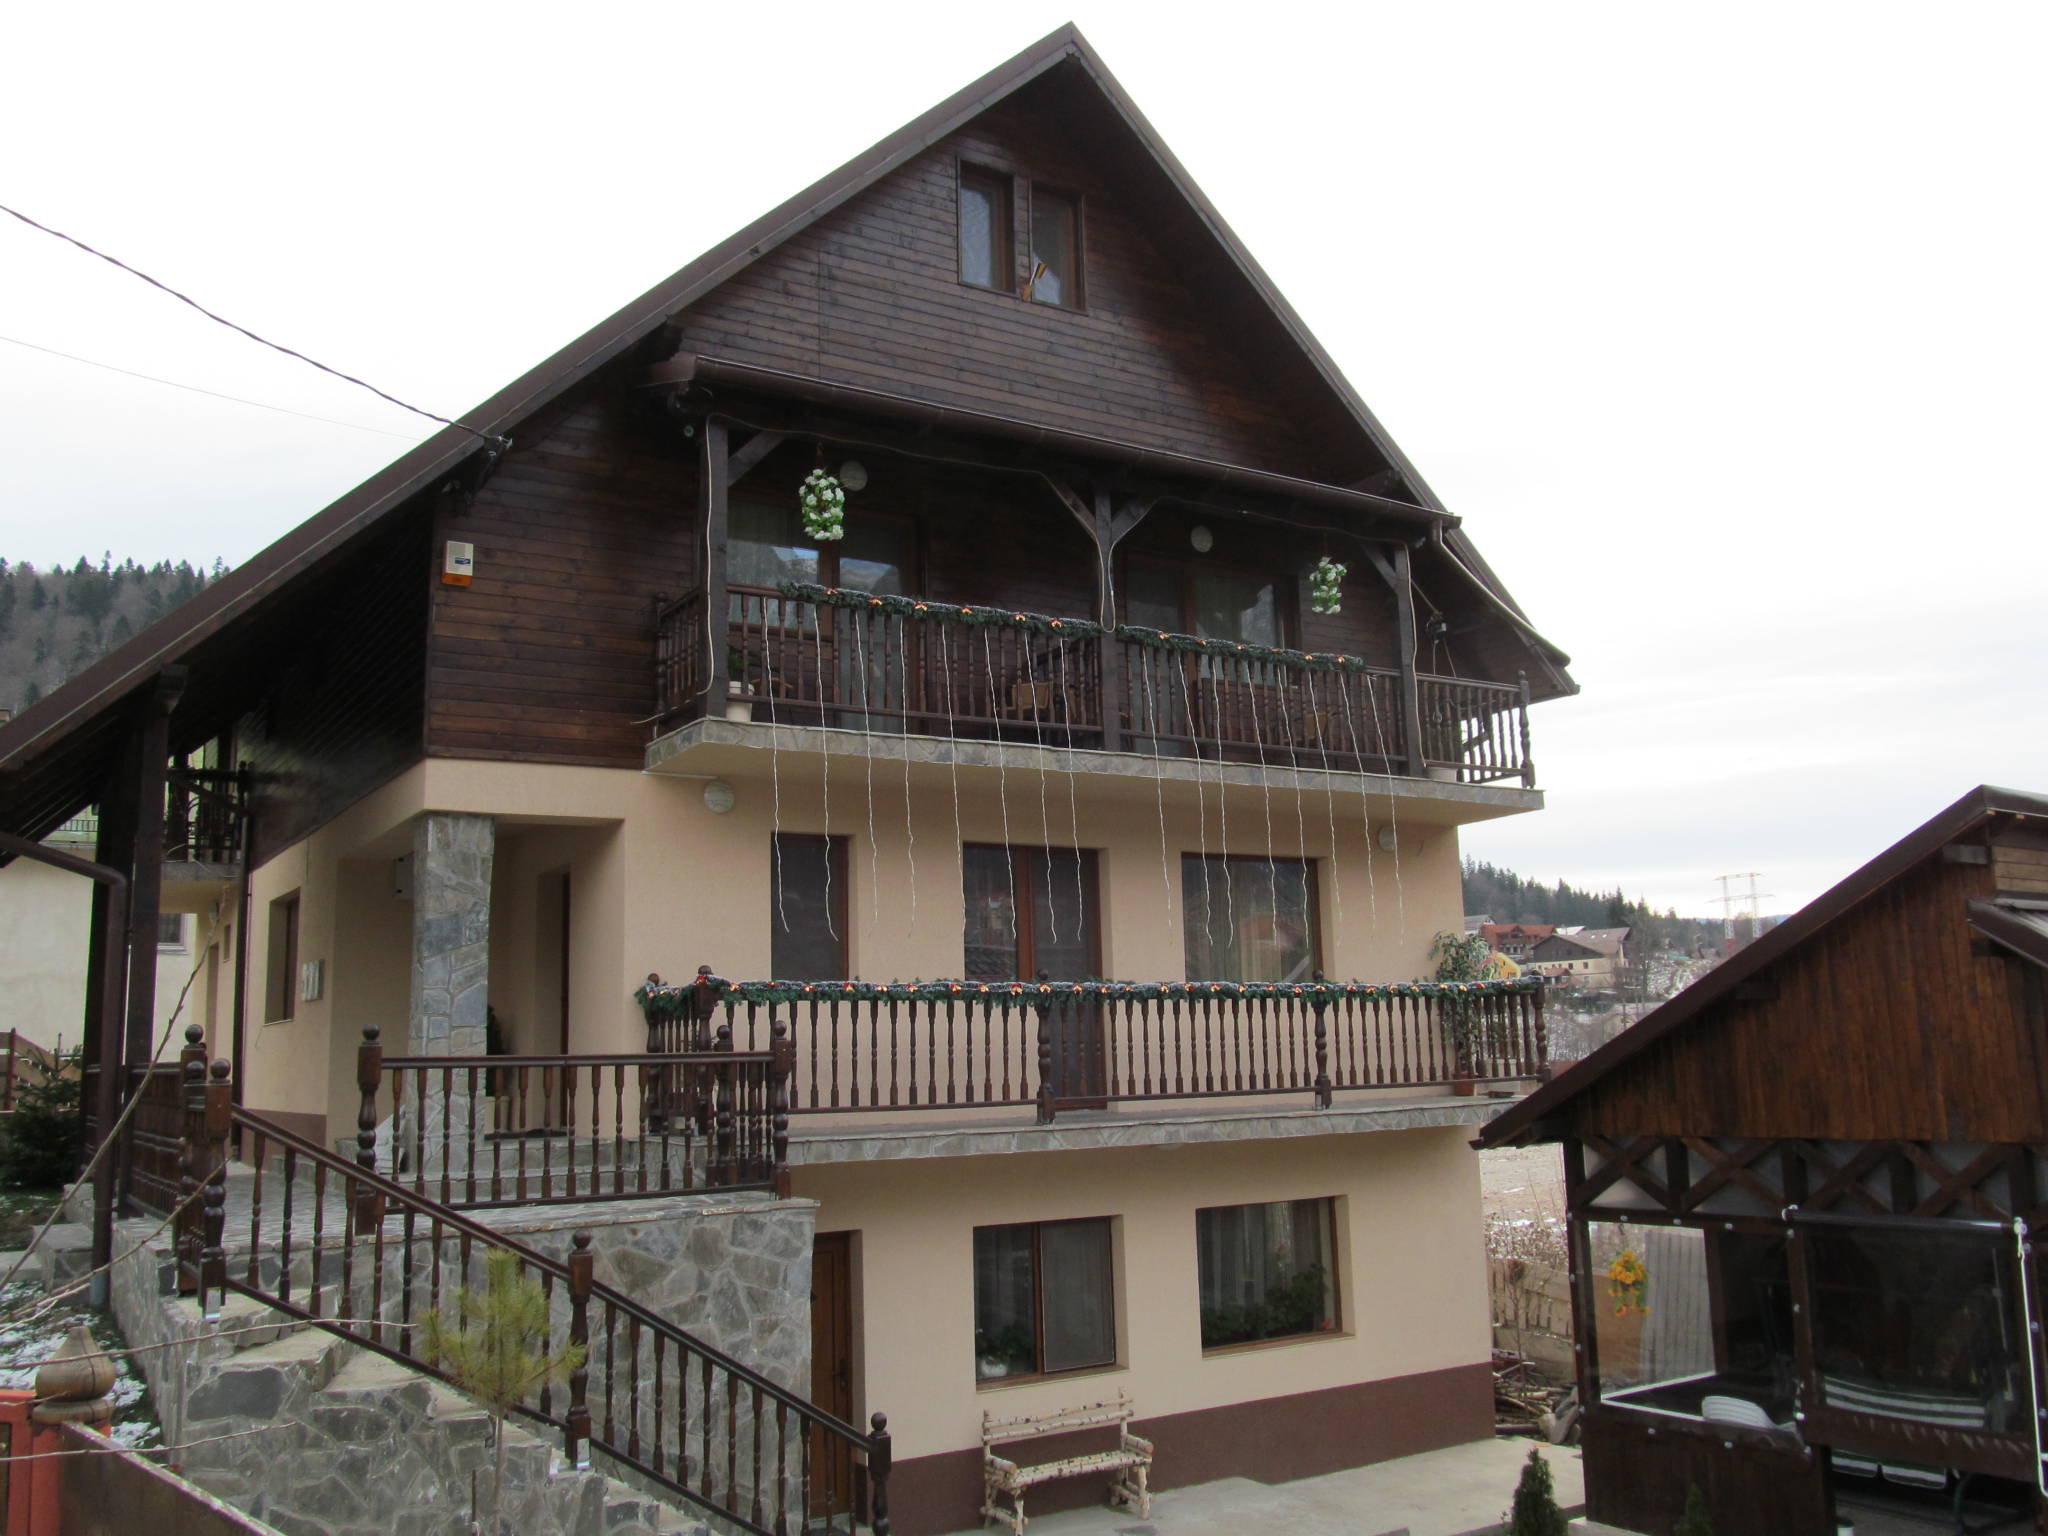 Buşteni accommodations - 263 offers - Revngo.com